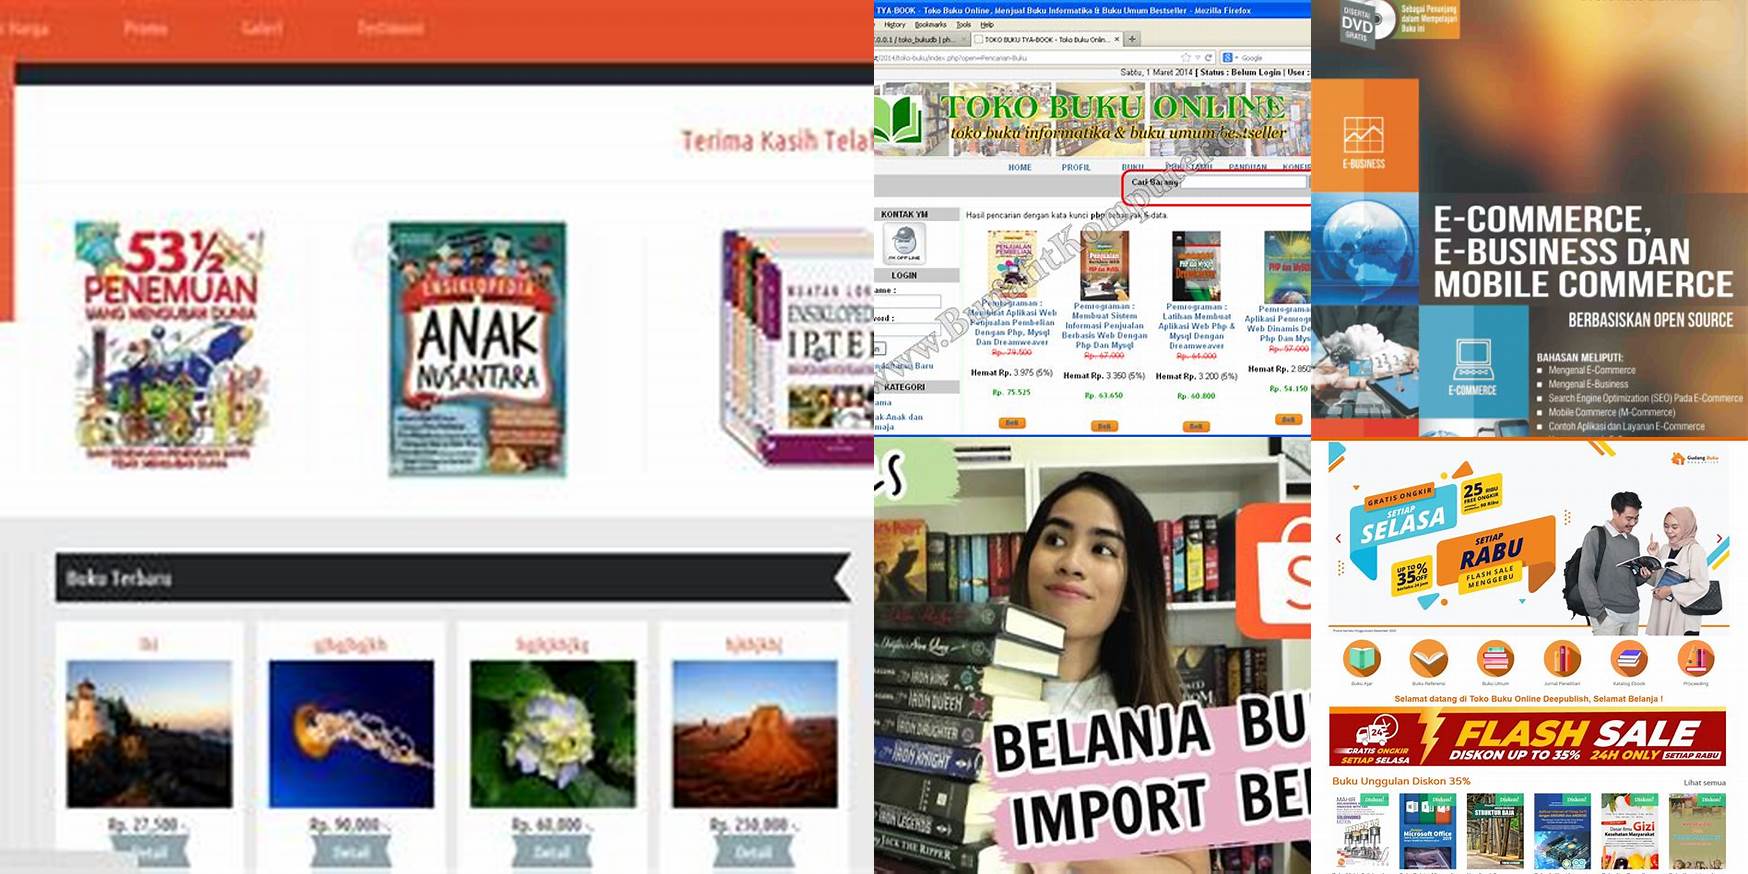 E-commerce Beli buku online